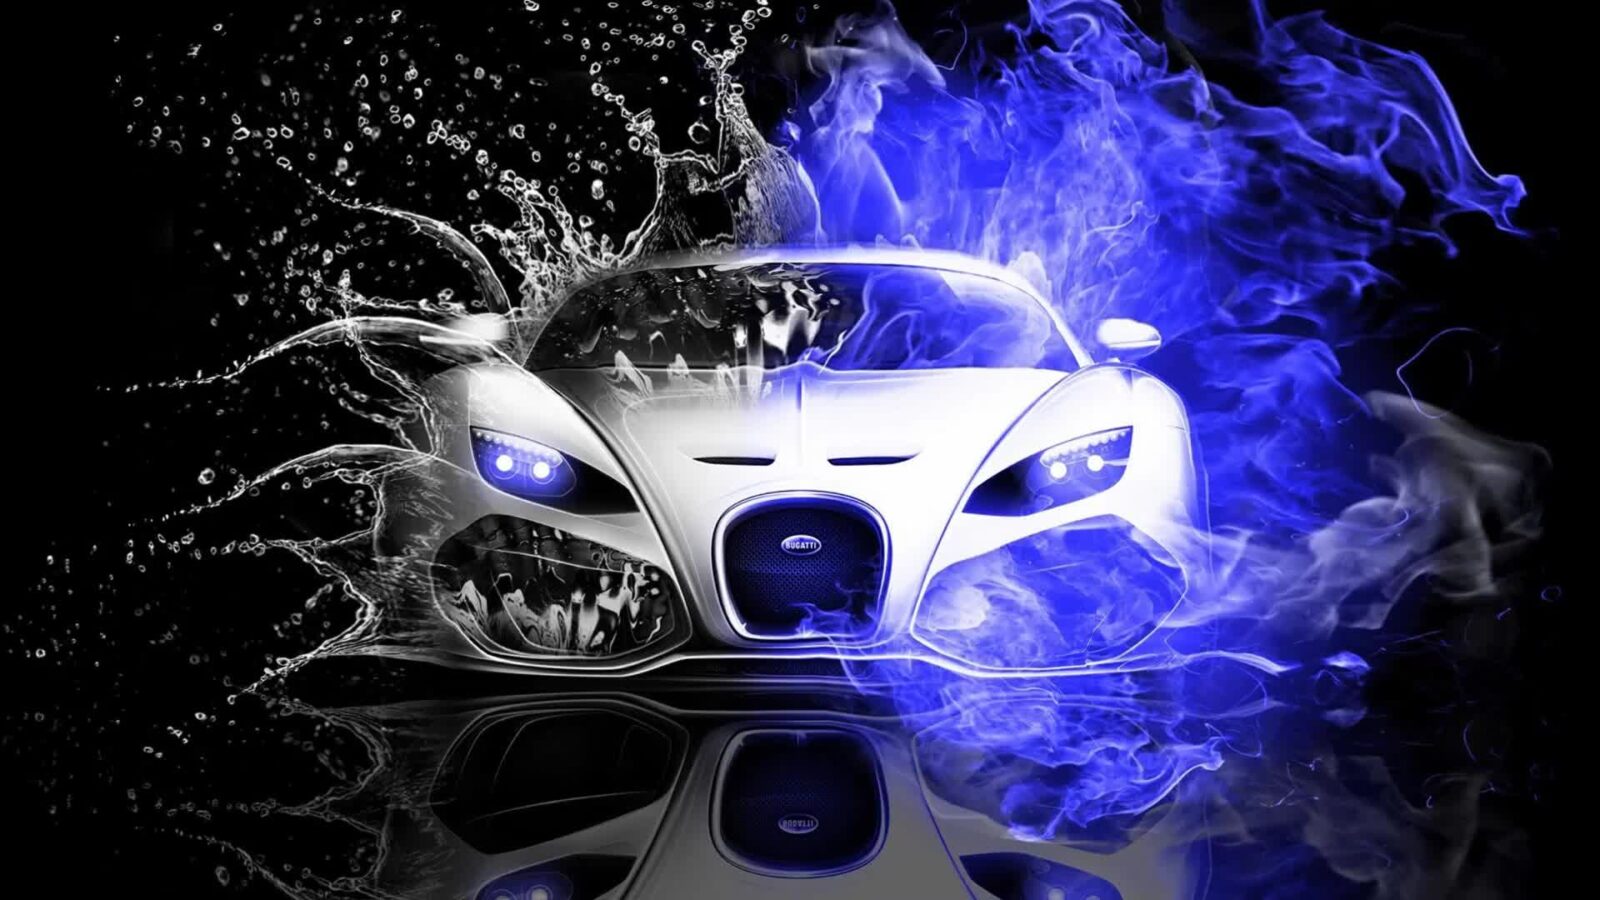 LiveWallpapers4Free.com | 3D Sport Car Bugatti Concept Art - Free Live Wallpaper